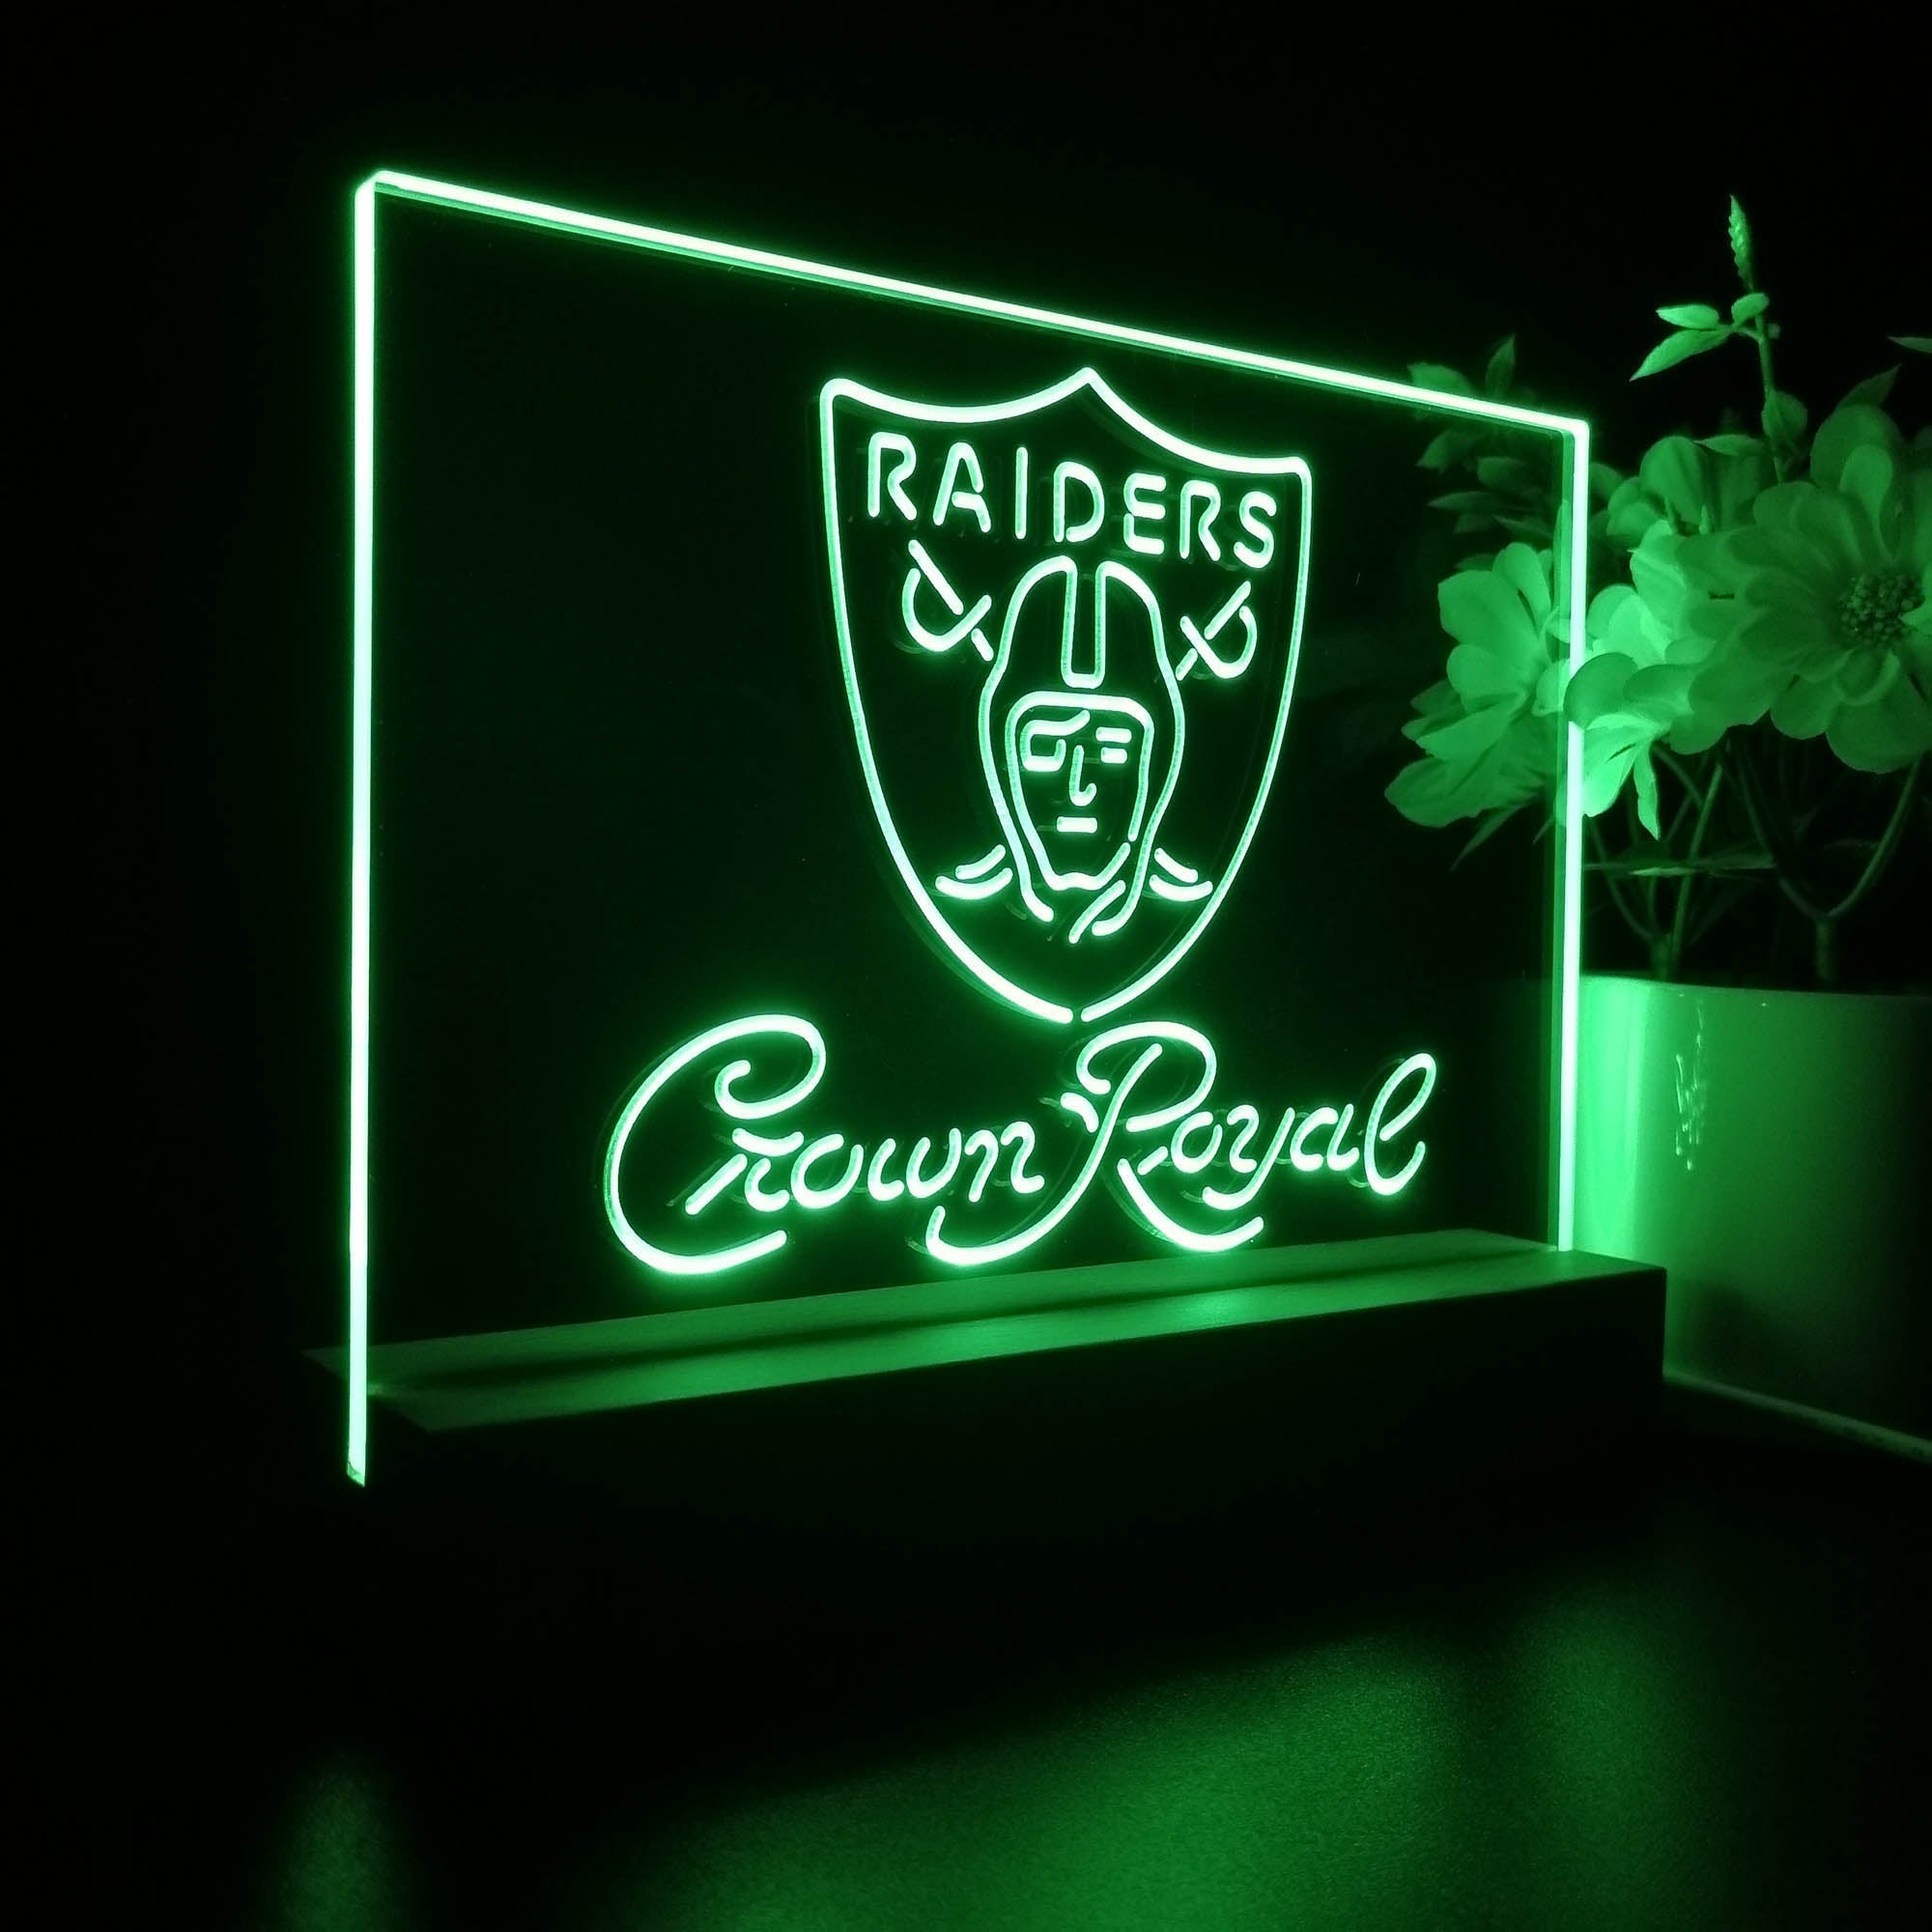 Crown Royal Bar Las Vegas Raiders Night Light Pub Bar Lamp